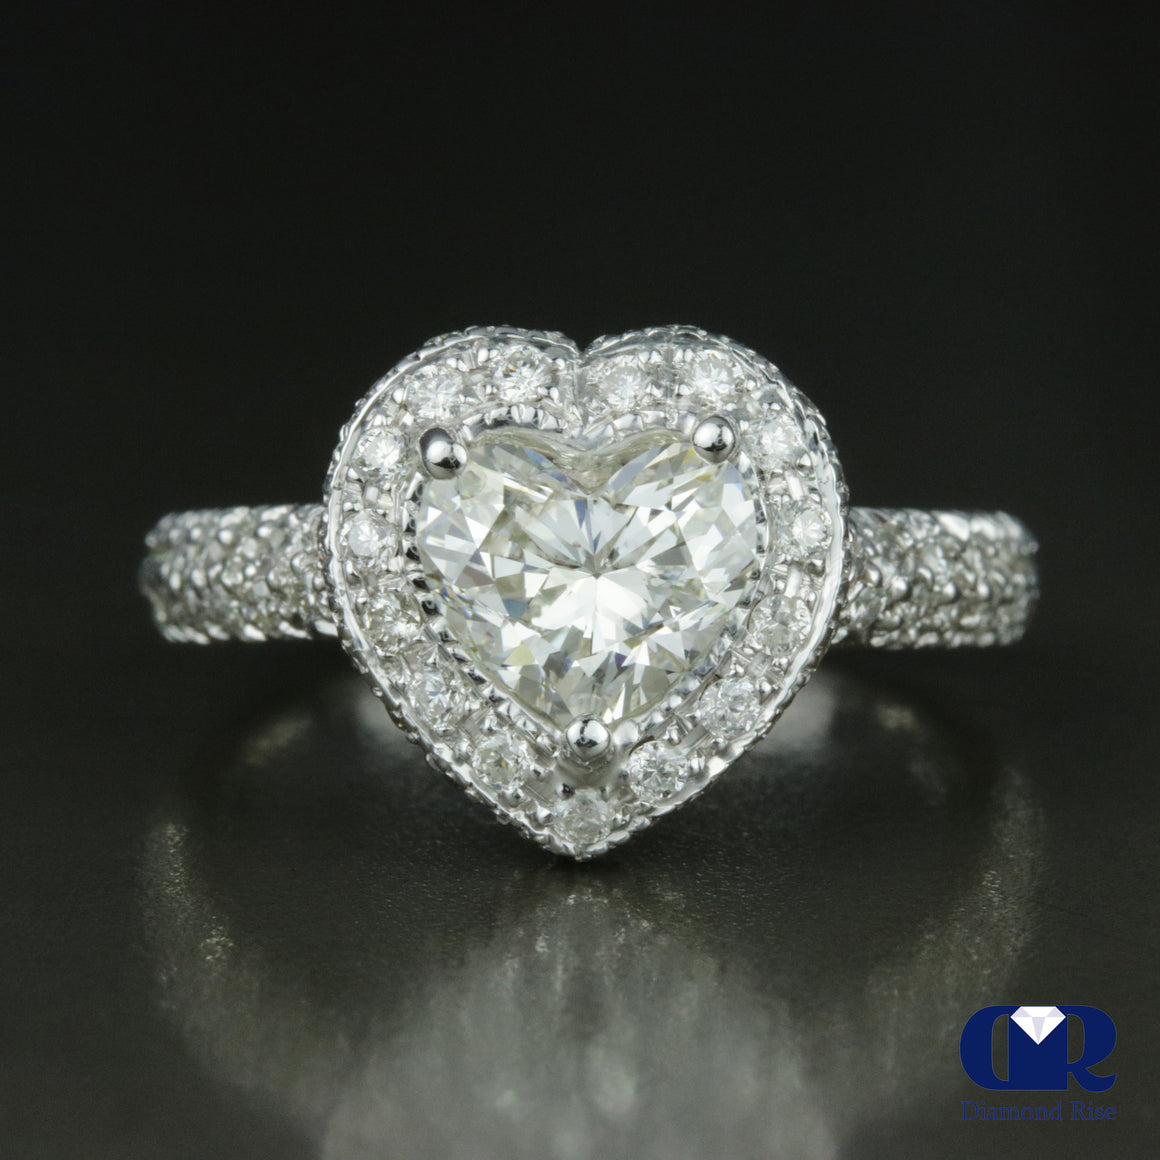 1.77 Carat Heart Shaped Diamond Halo Engagement Ring In 18K White Gold - Diamond Rise Jewelry